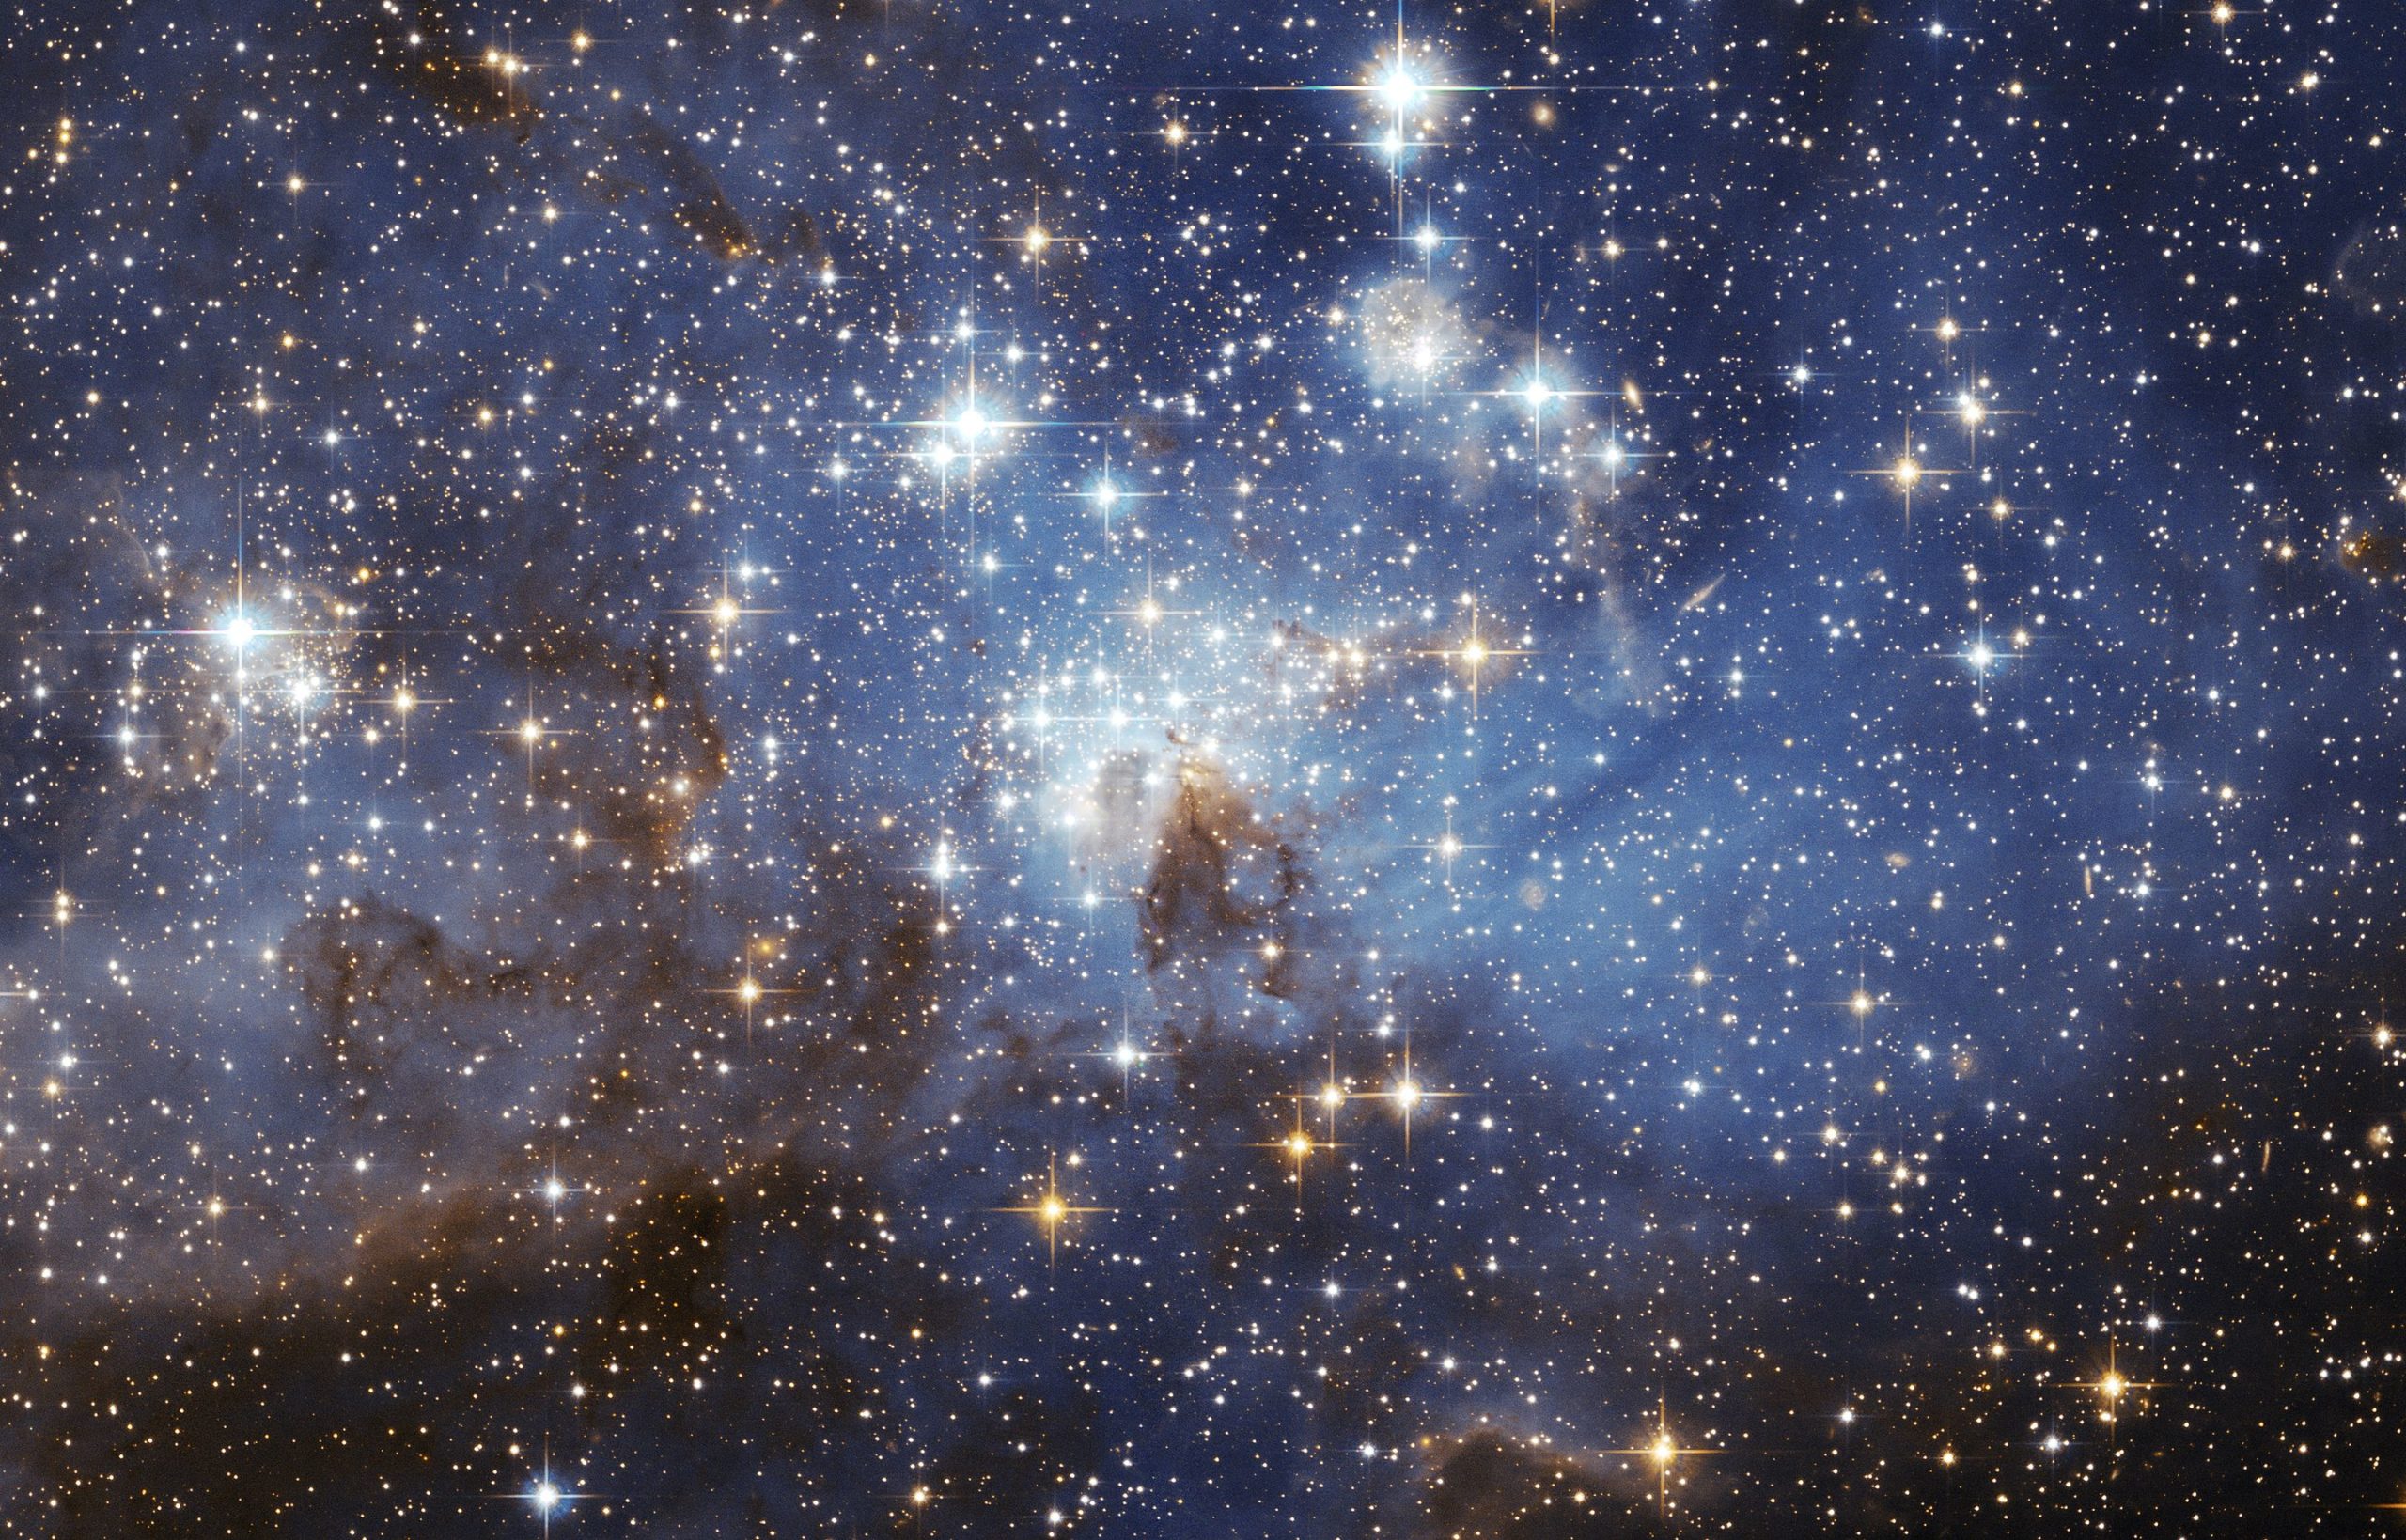 Image of stars.